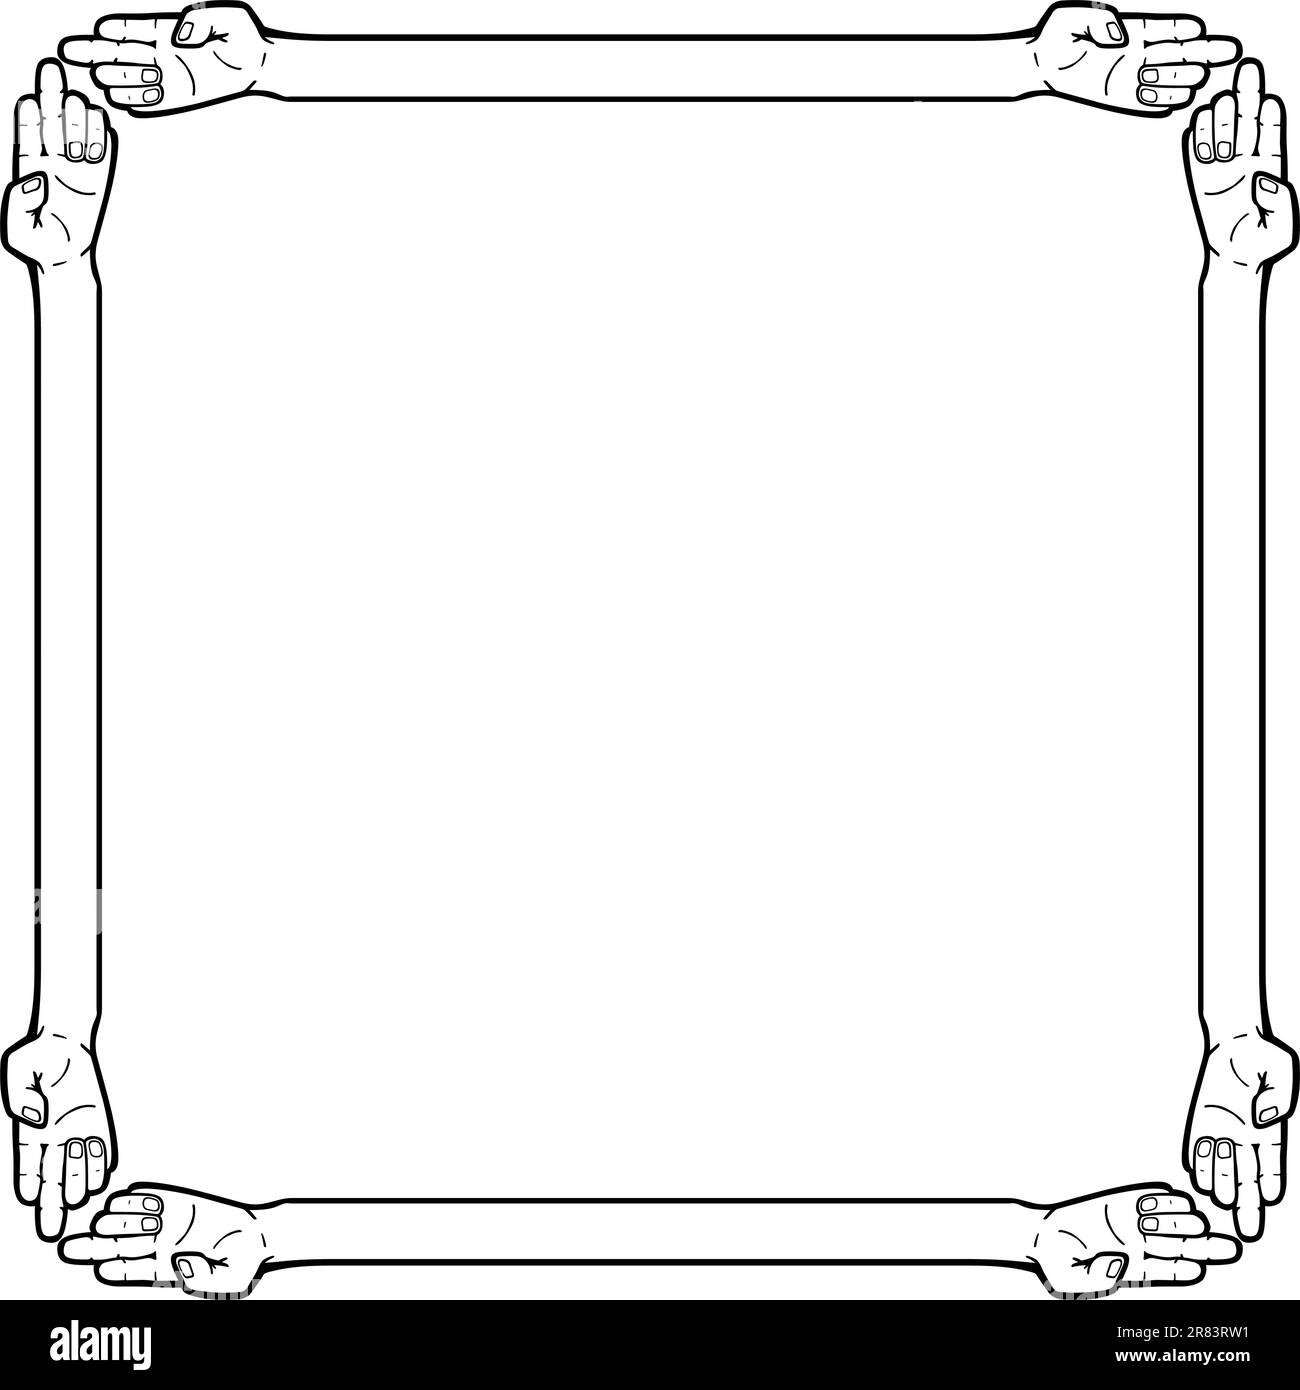 Hand frame on white background Stock Vector